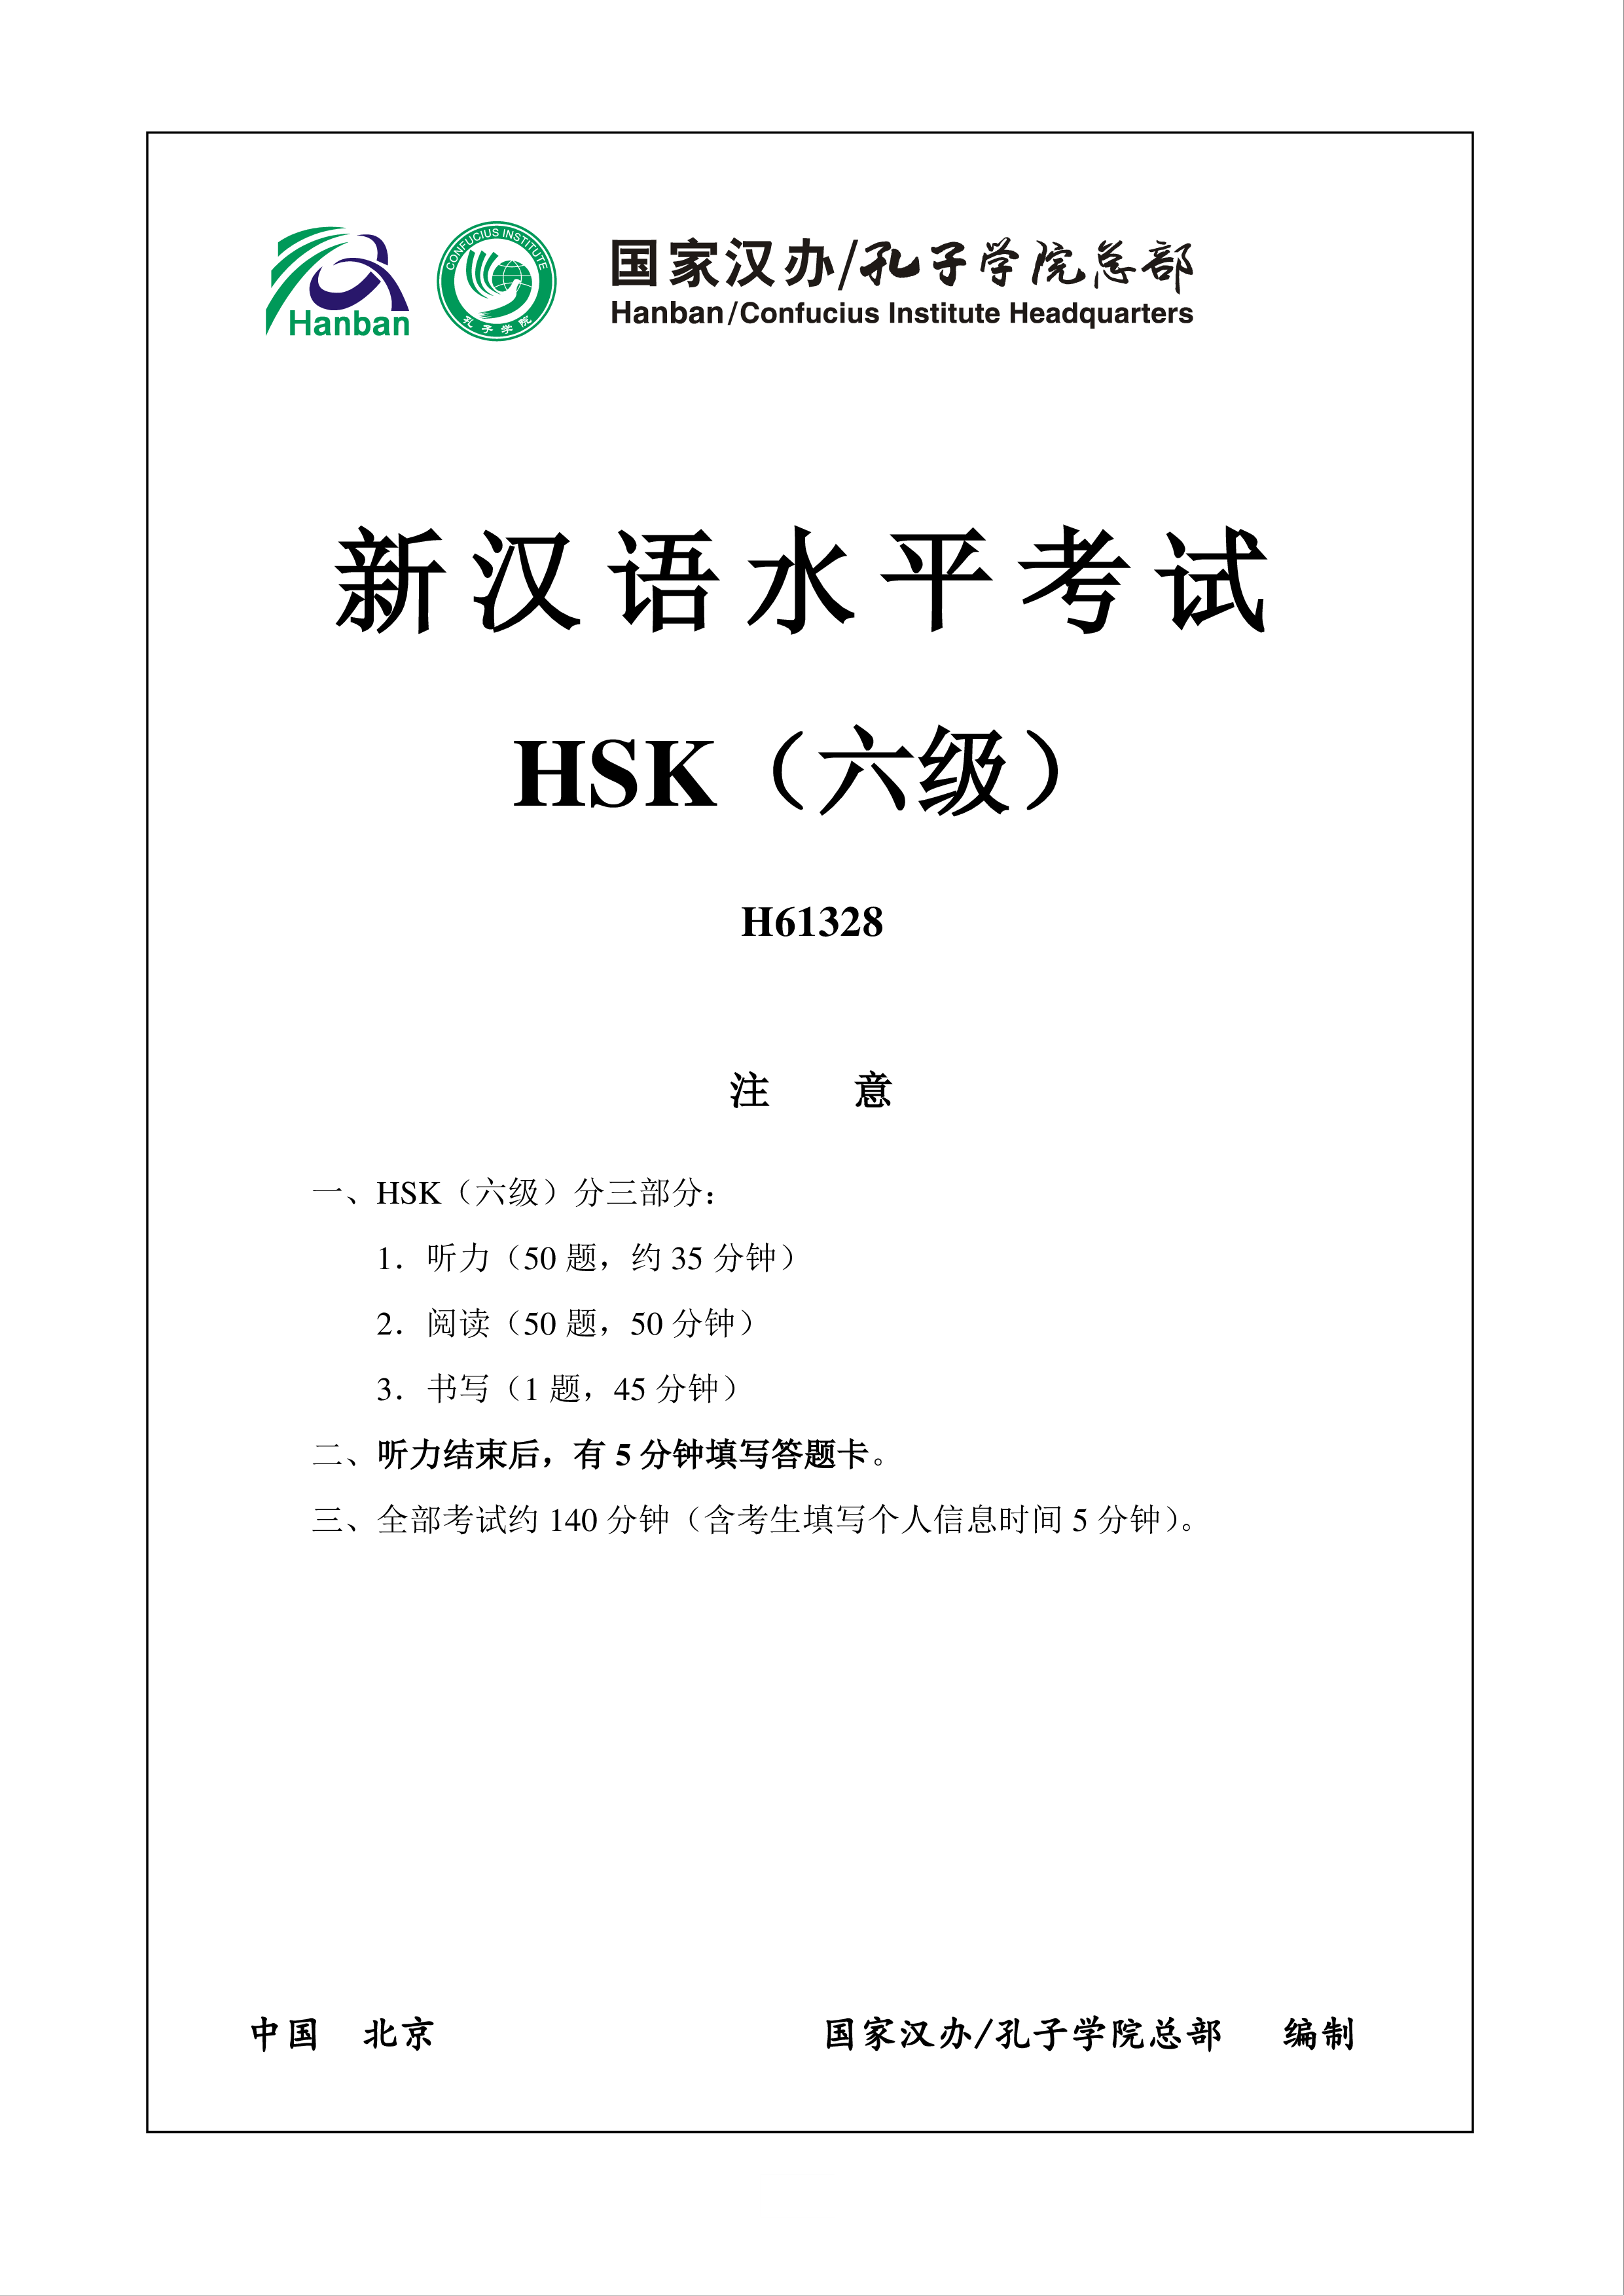 hsk6 chinese exam incl audio, answers h61328 plantilla imagen principal